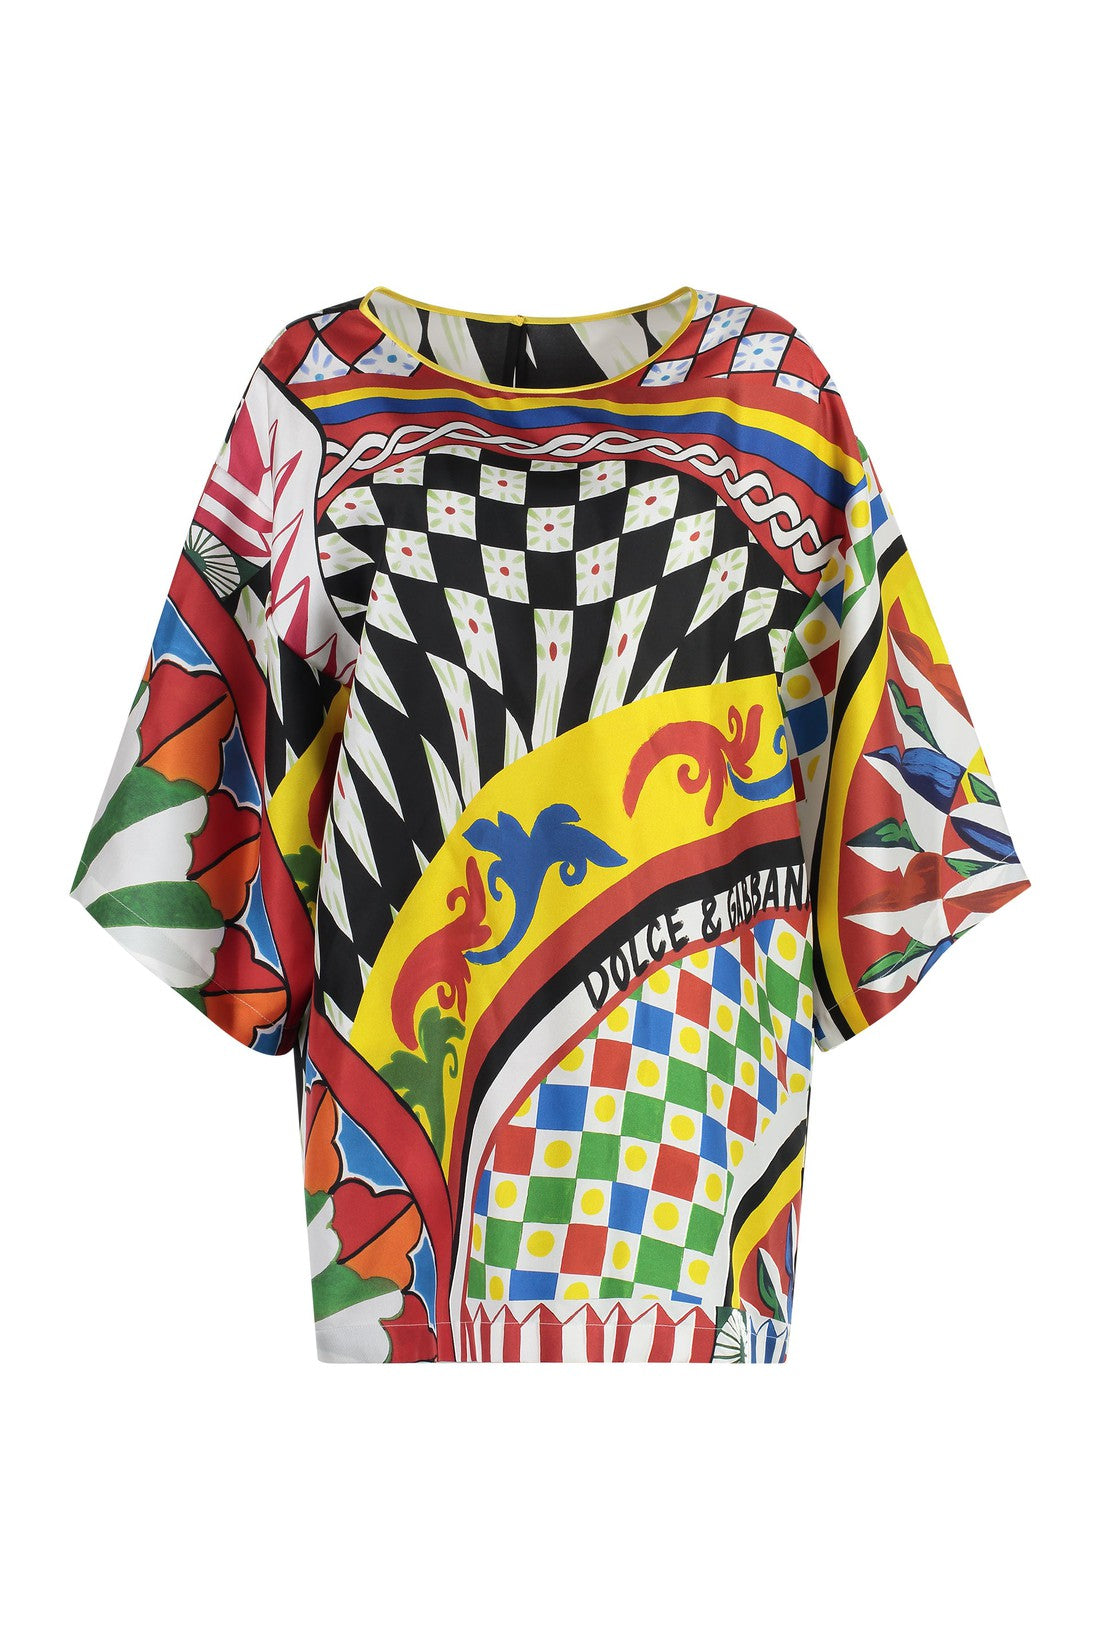 Dolce & Gabbana-OUTLET-SALE-Printed silk blouse-ARCHIVIST